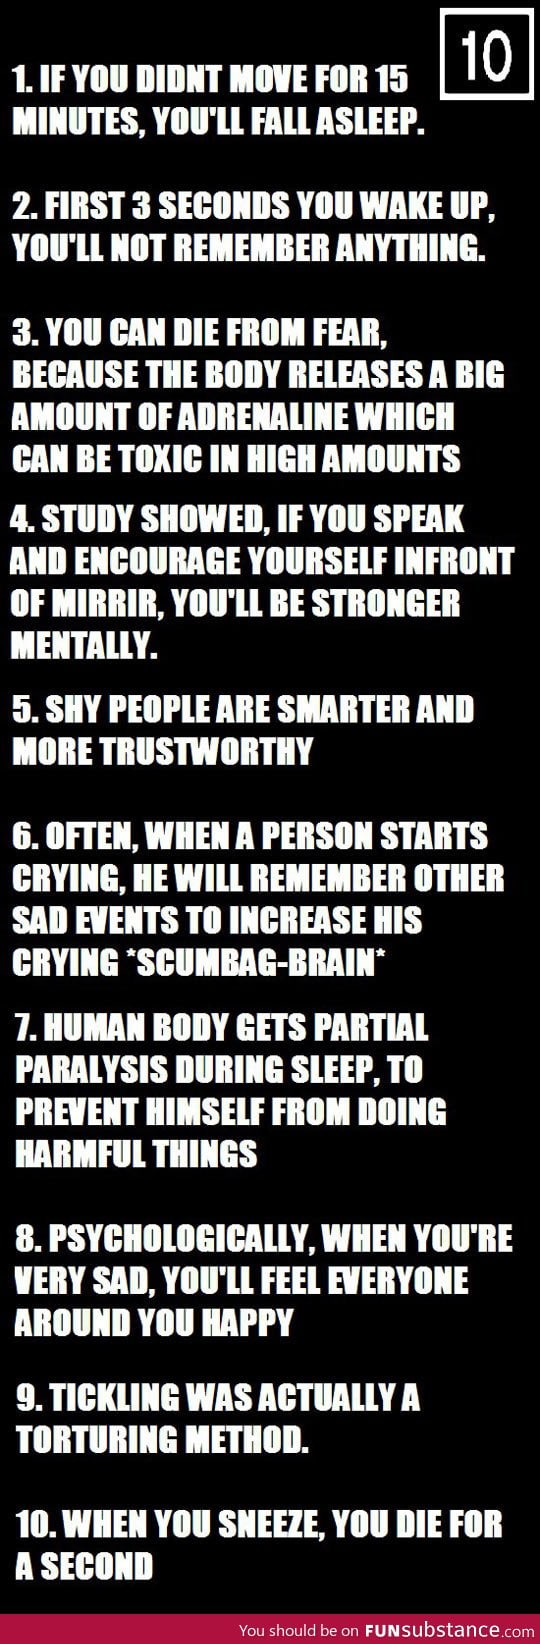 Ten psychological facts